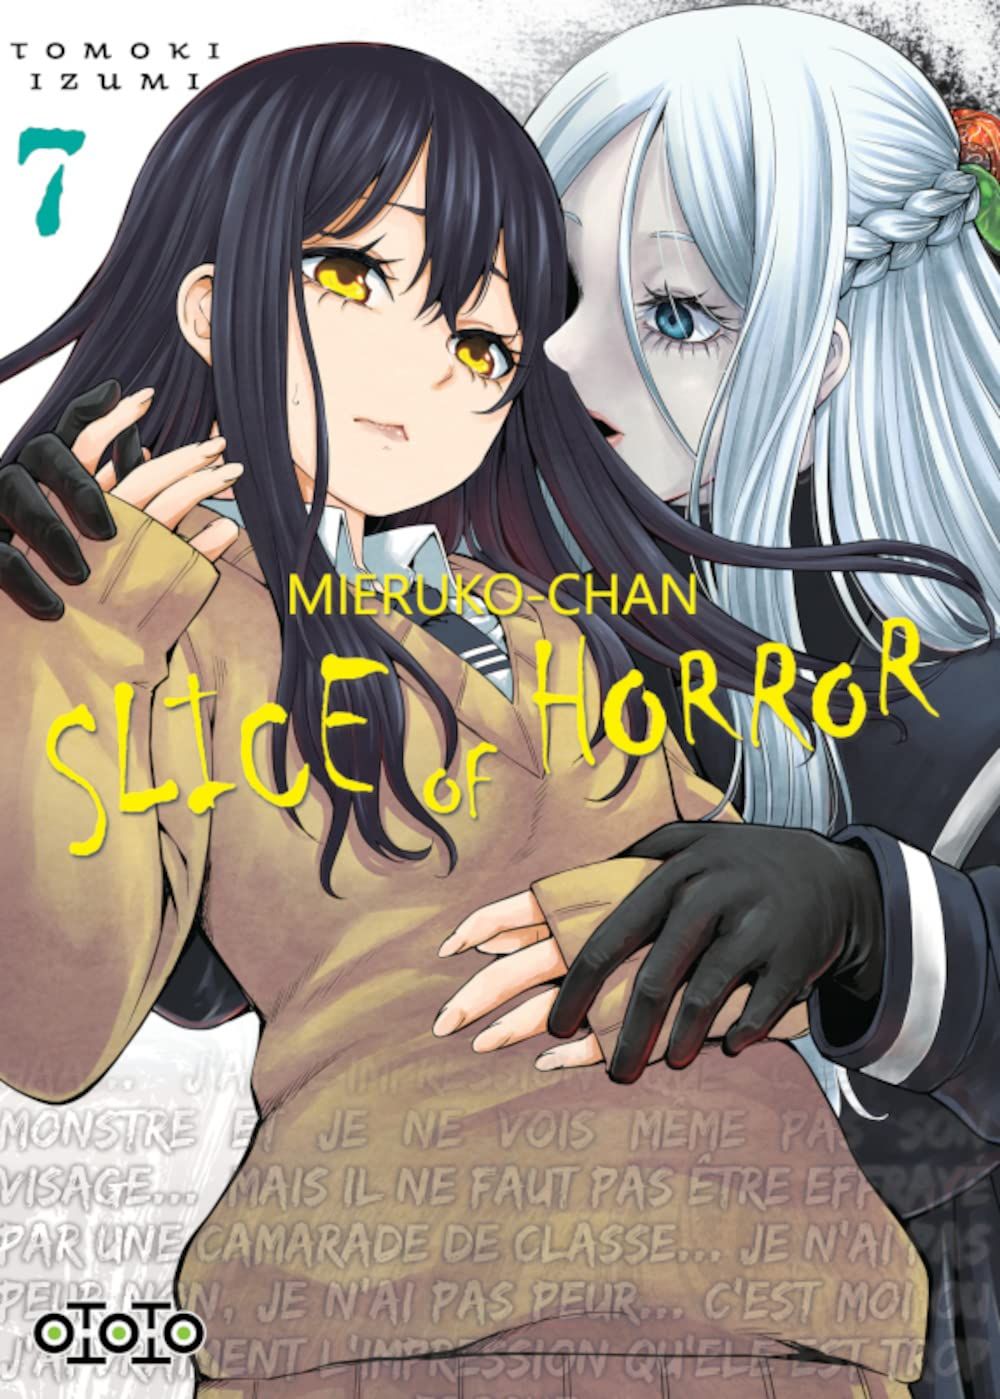 Mieruko-chan Slice of Horror – Tome 7